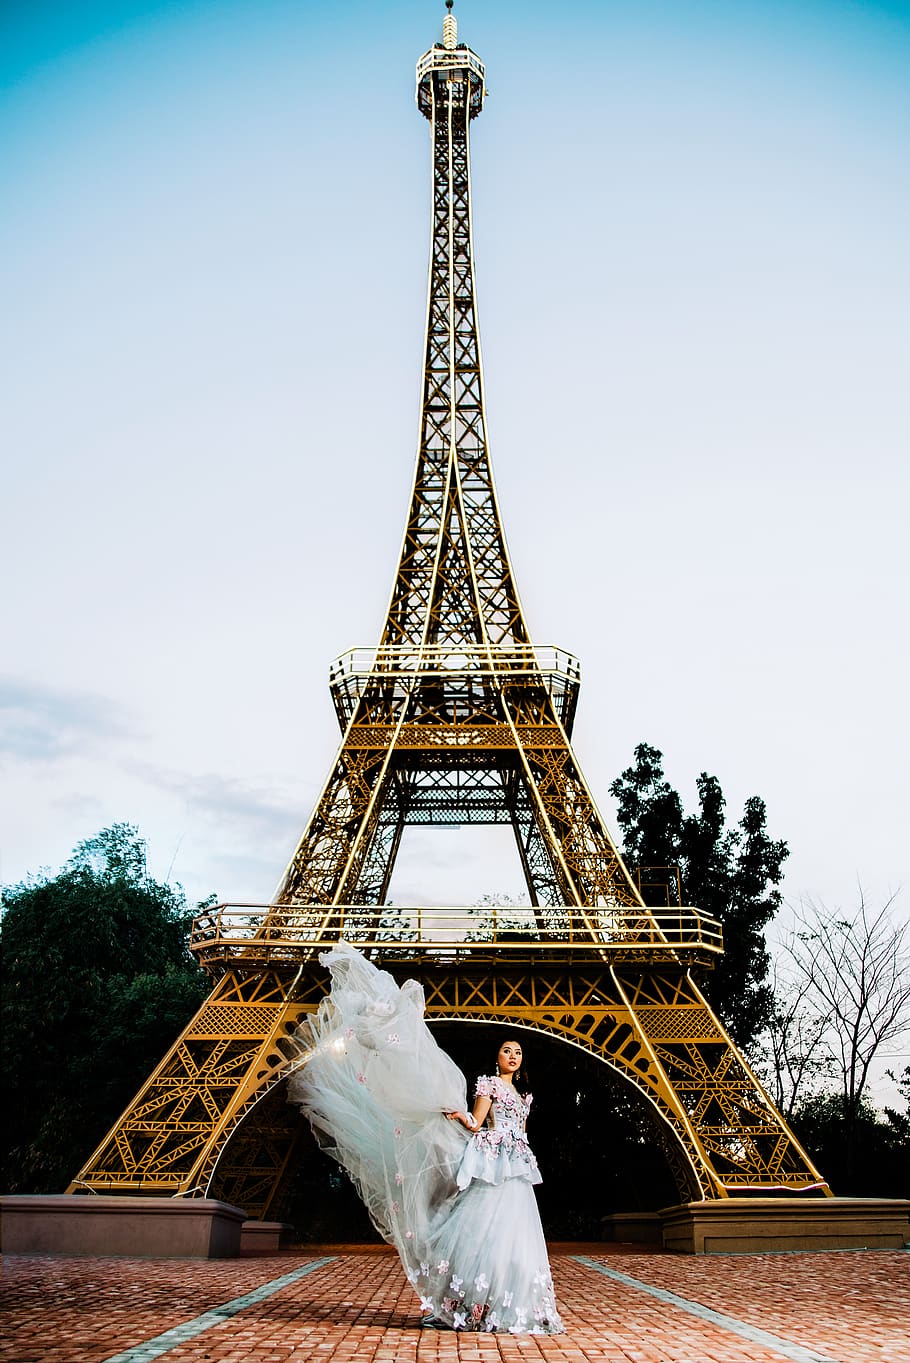 Woman Standing Near Eiffel Tower, architecture, art, daylight